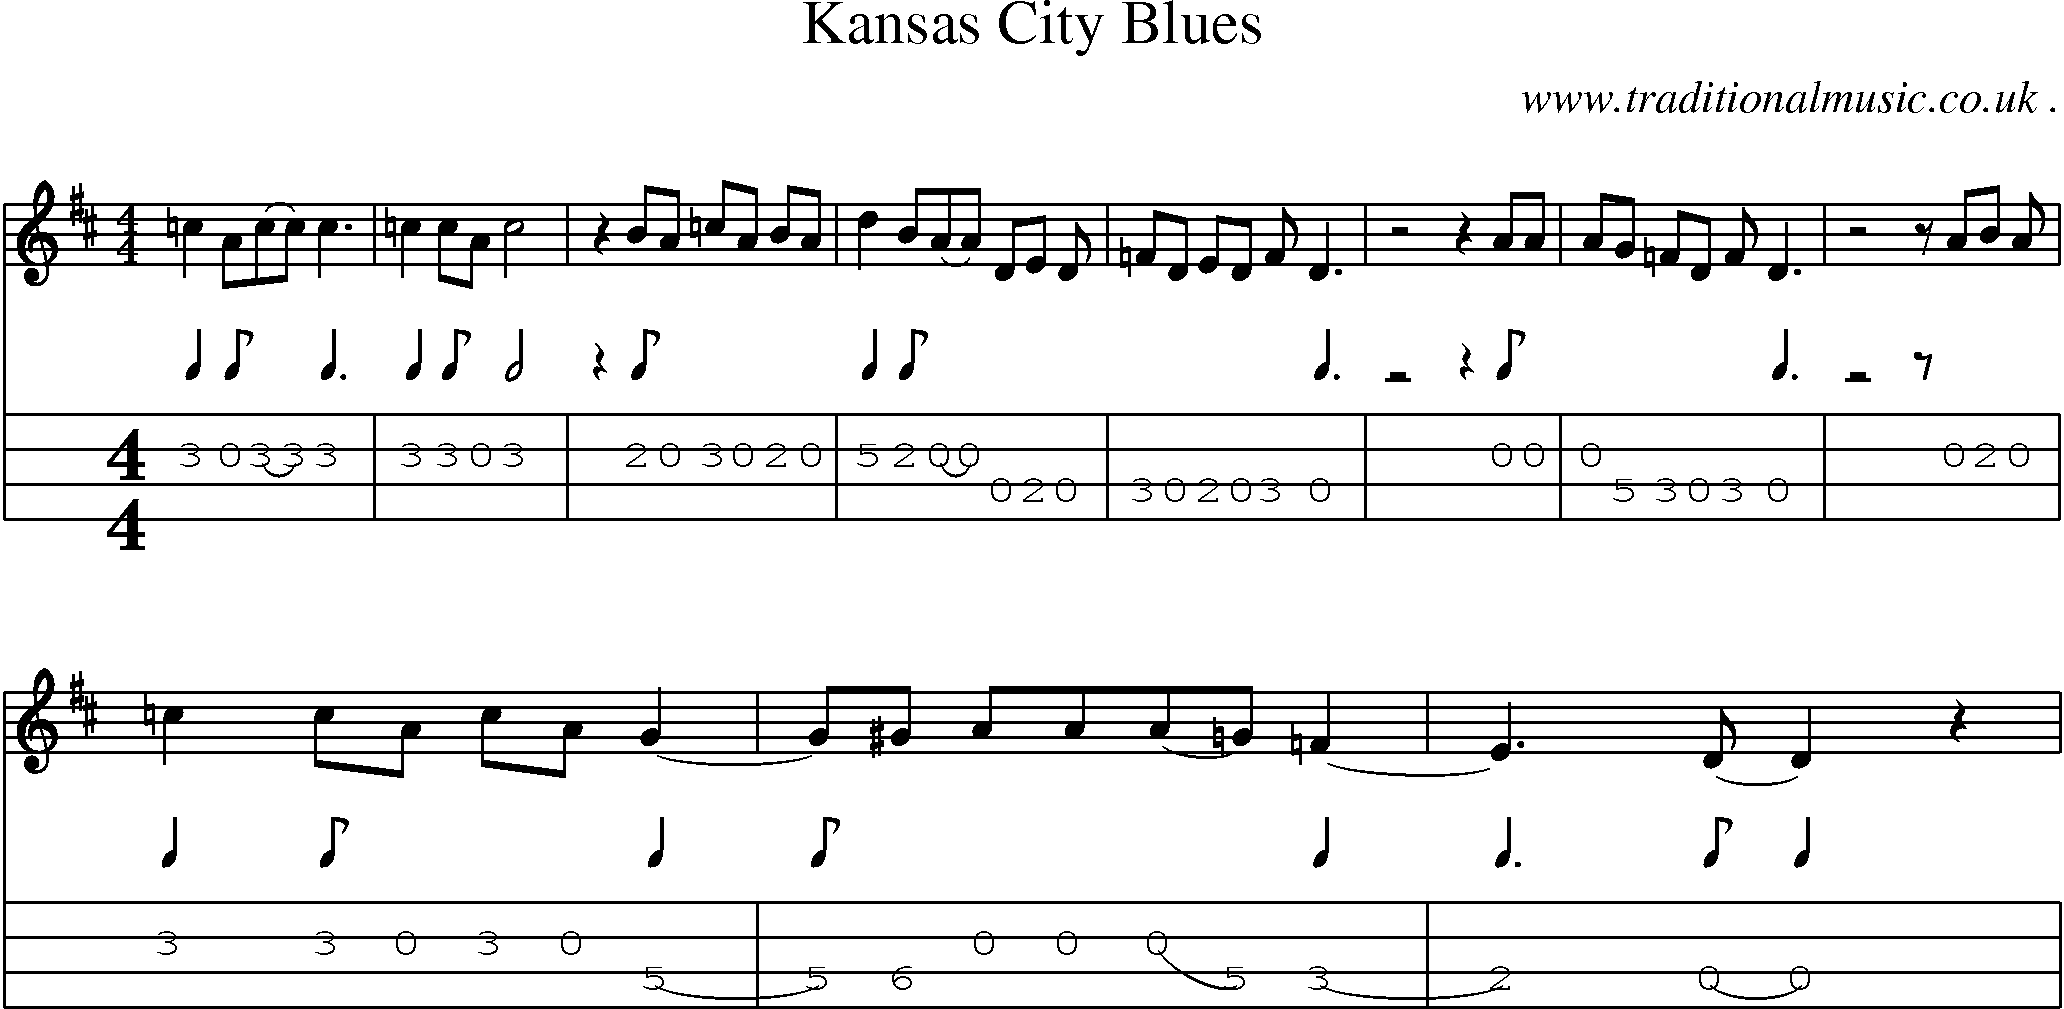 Music Score and Mandolin Tabs for Kansas City Blues